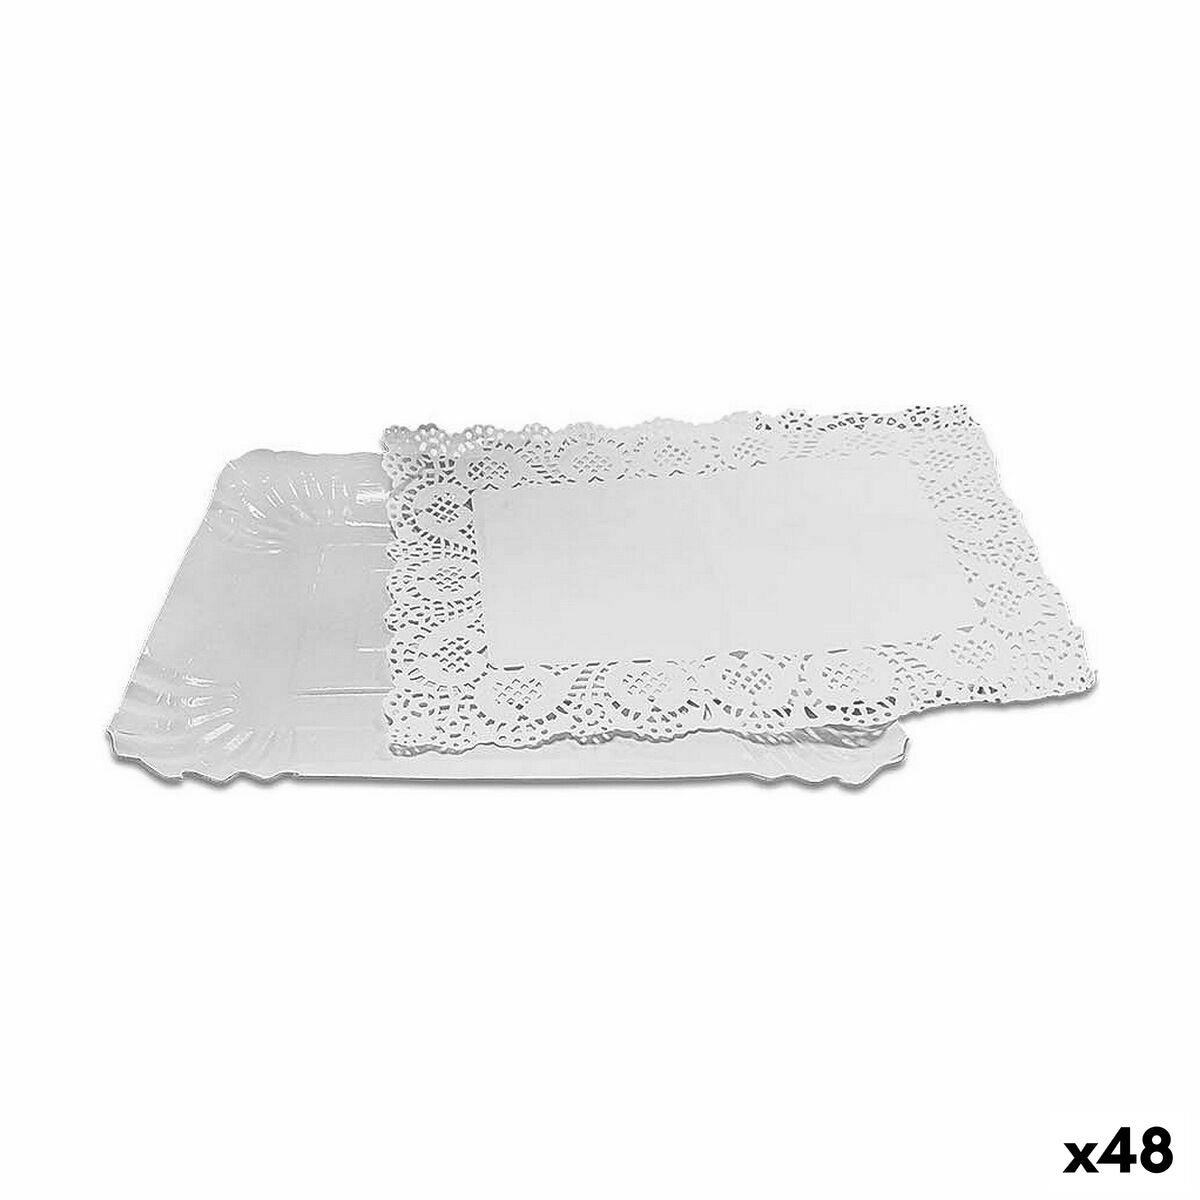 Cake stand Algon White 15 x 22 x 1 cm (4 Pieces) (48 Units)